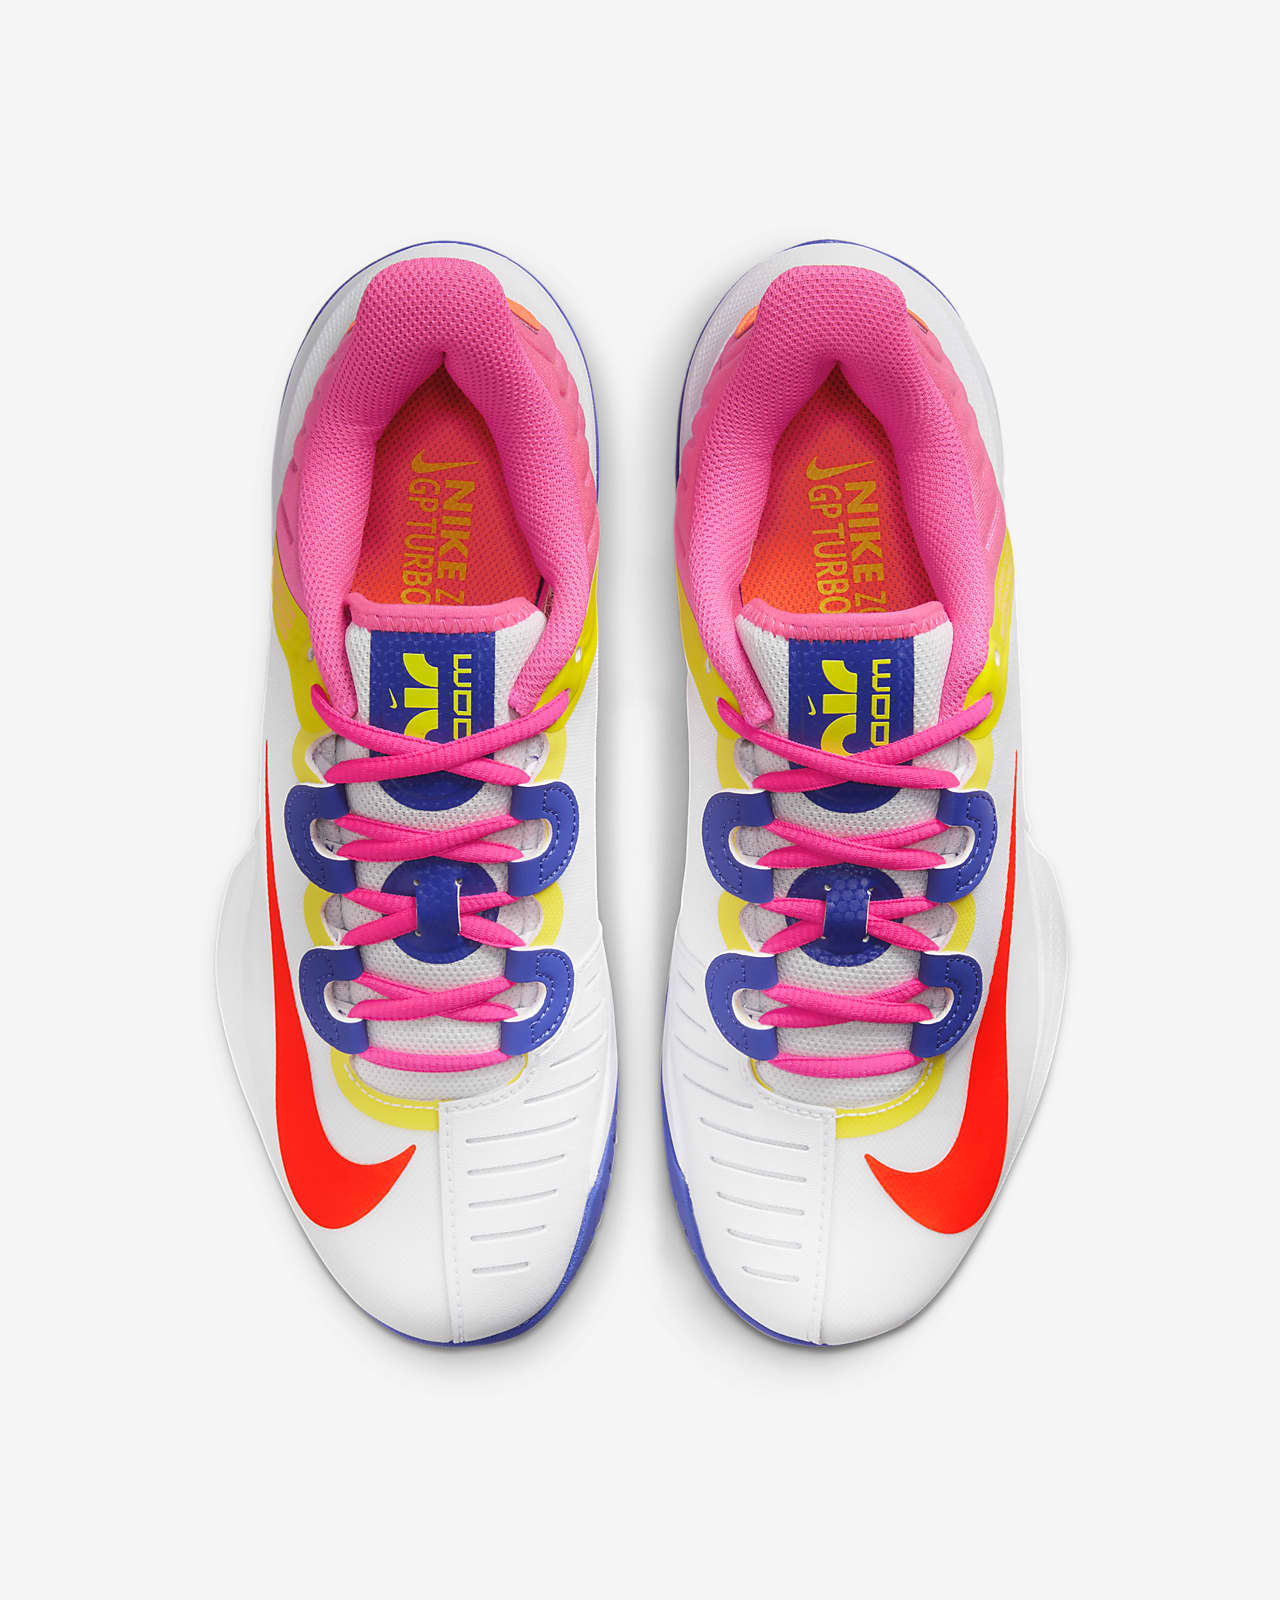 Nike nike pegasus zoom turbo Zoom GP Turbo Naomi Osaka Women's Hard Court Tennis Shoes